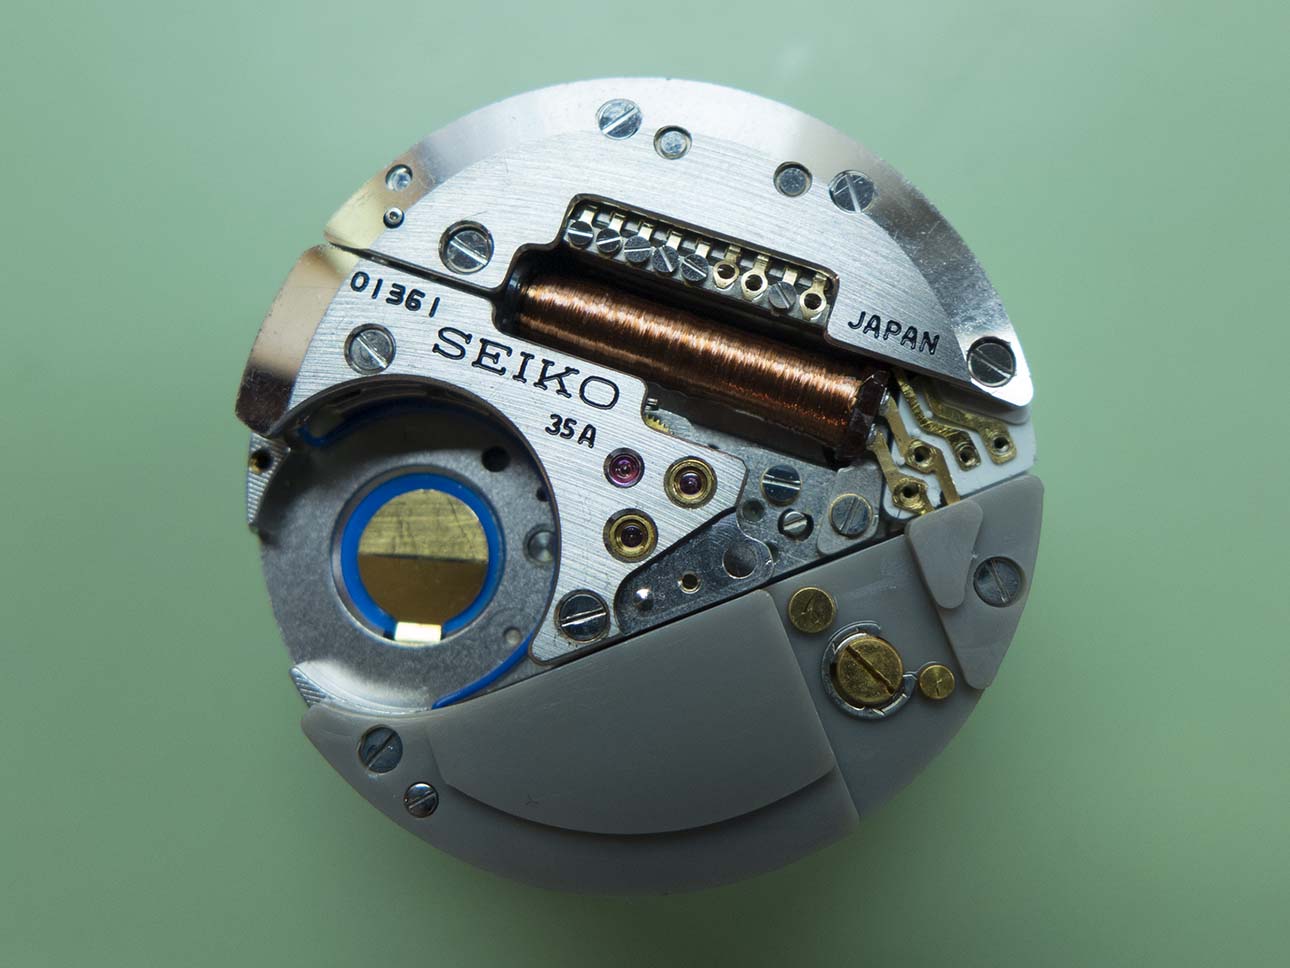 Seiko Astron 35-9000 | The Watch Bloke